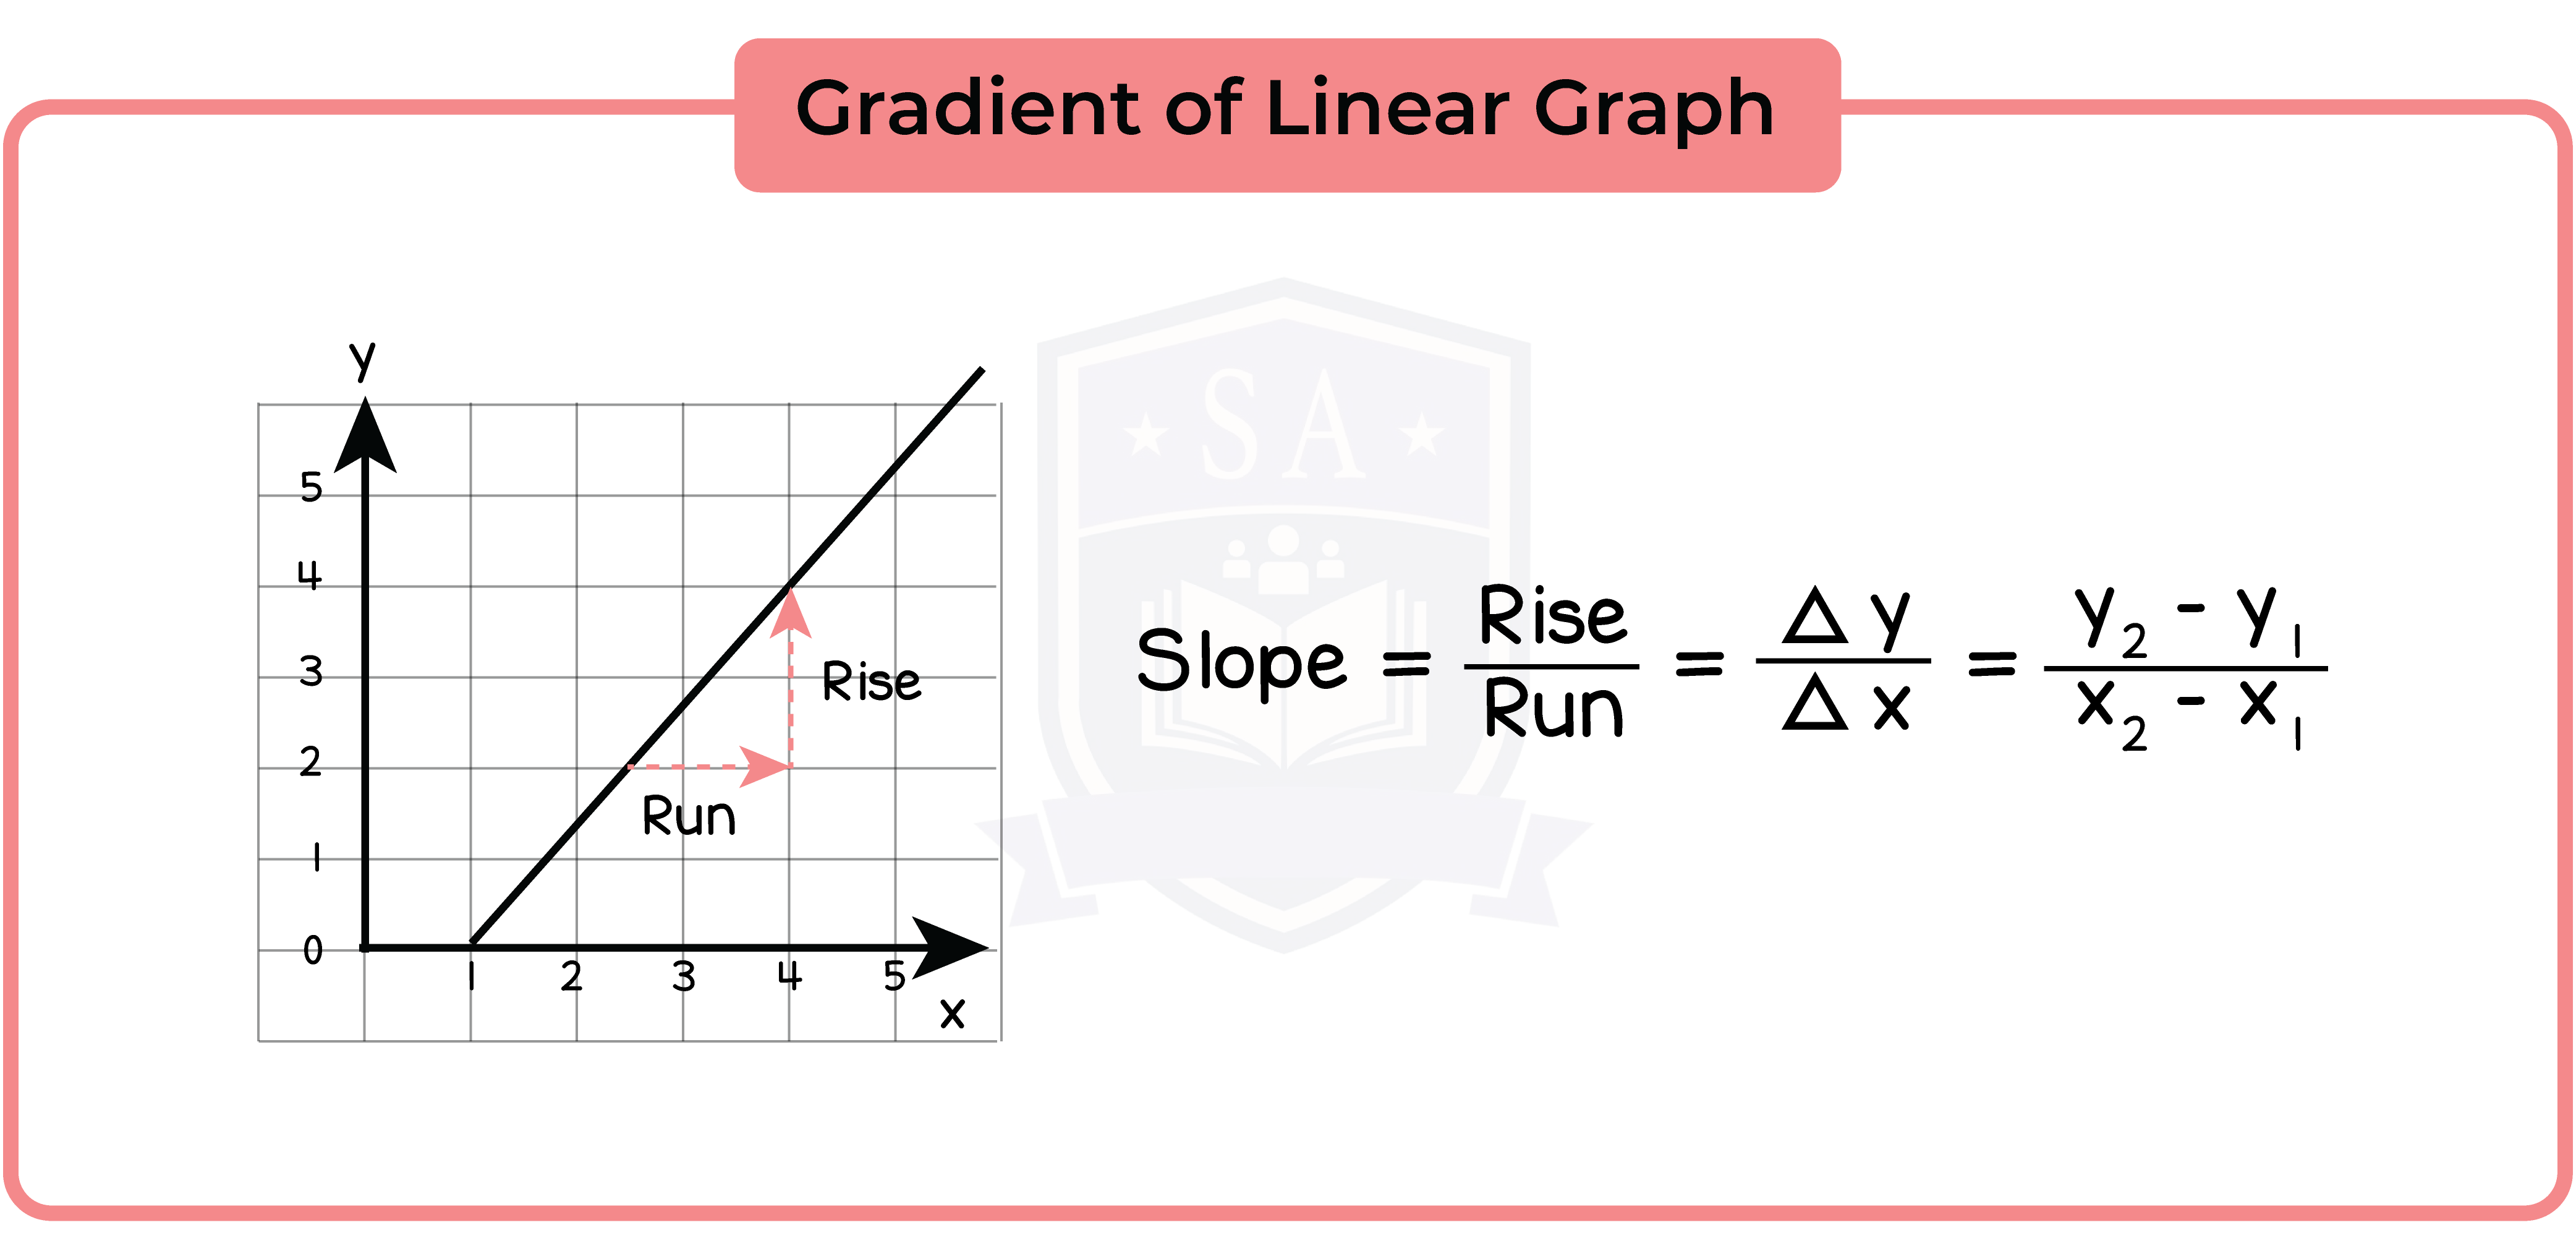 edexcel_igcse_mathematics a_topic 23_graphs_005_Gradient of Linear Graph